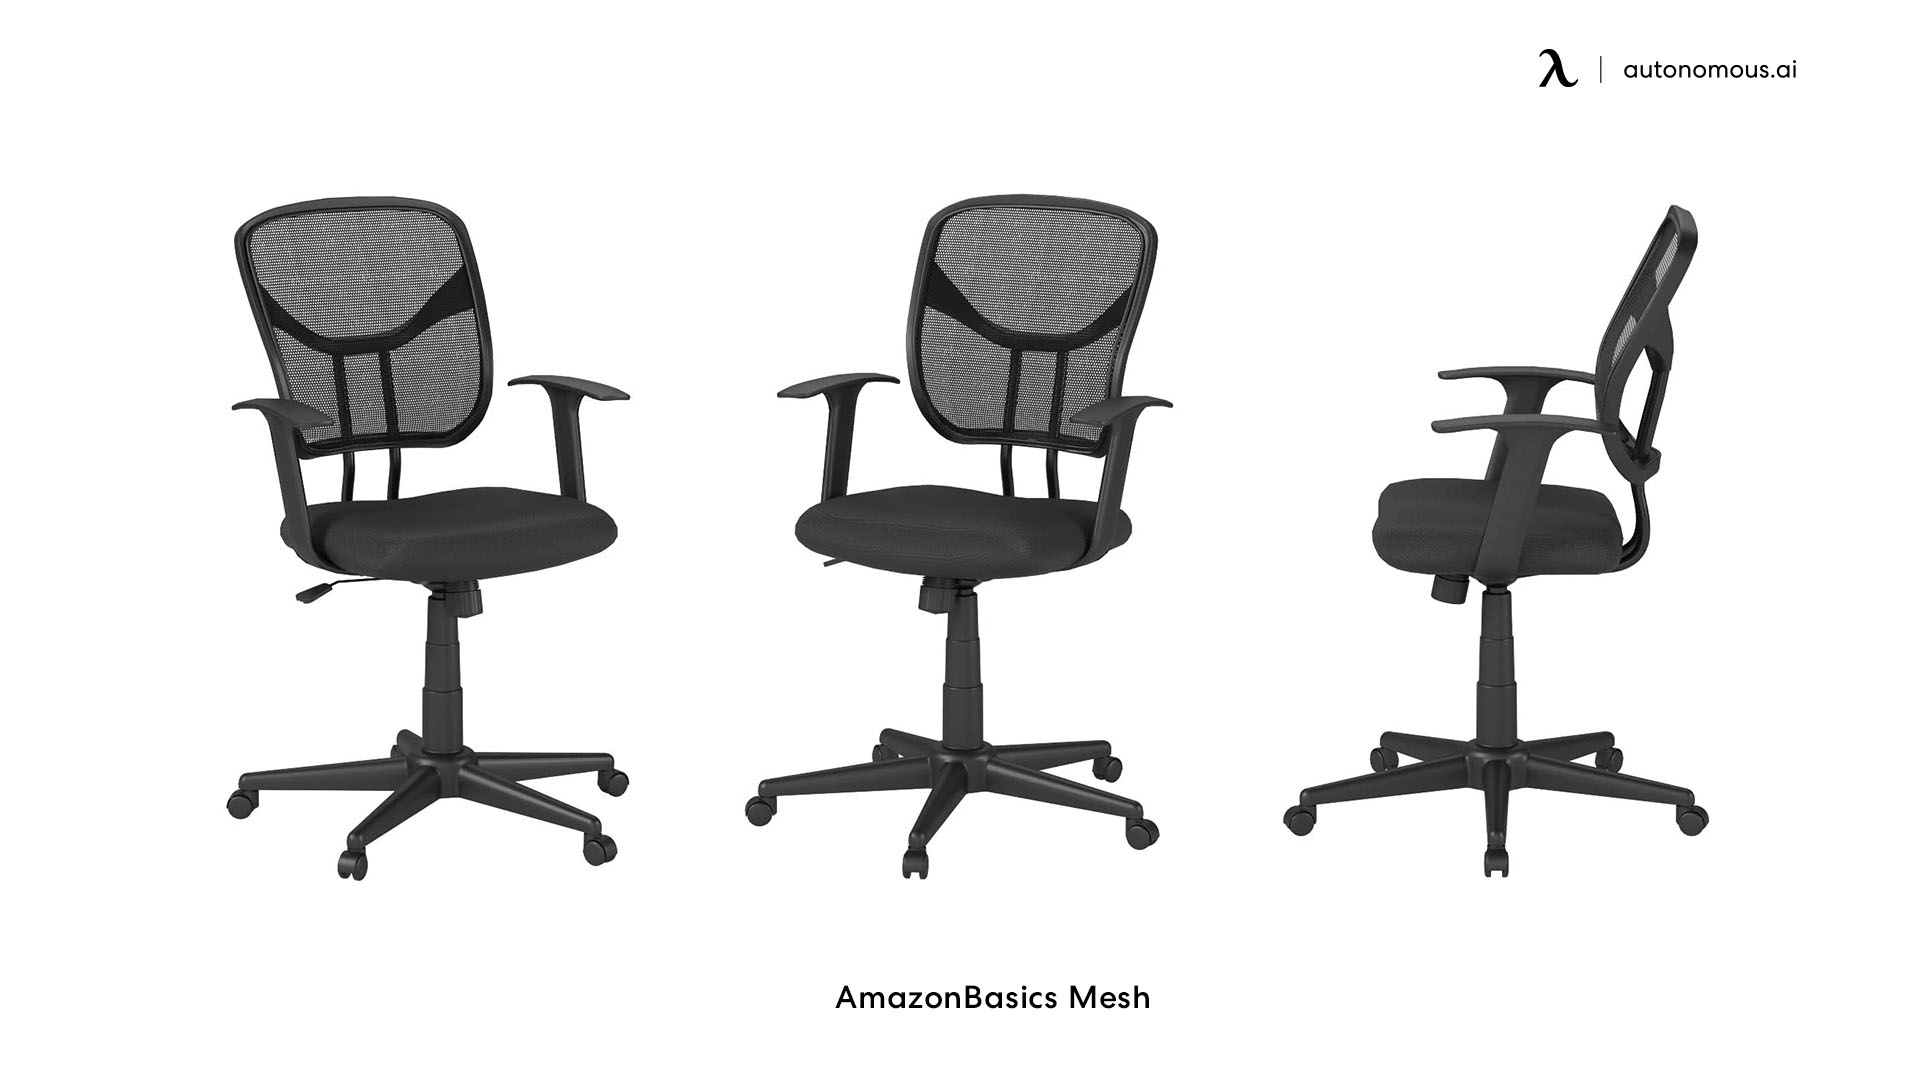 AmazonBasics Mesh office chairs for leg circulation